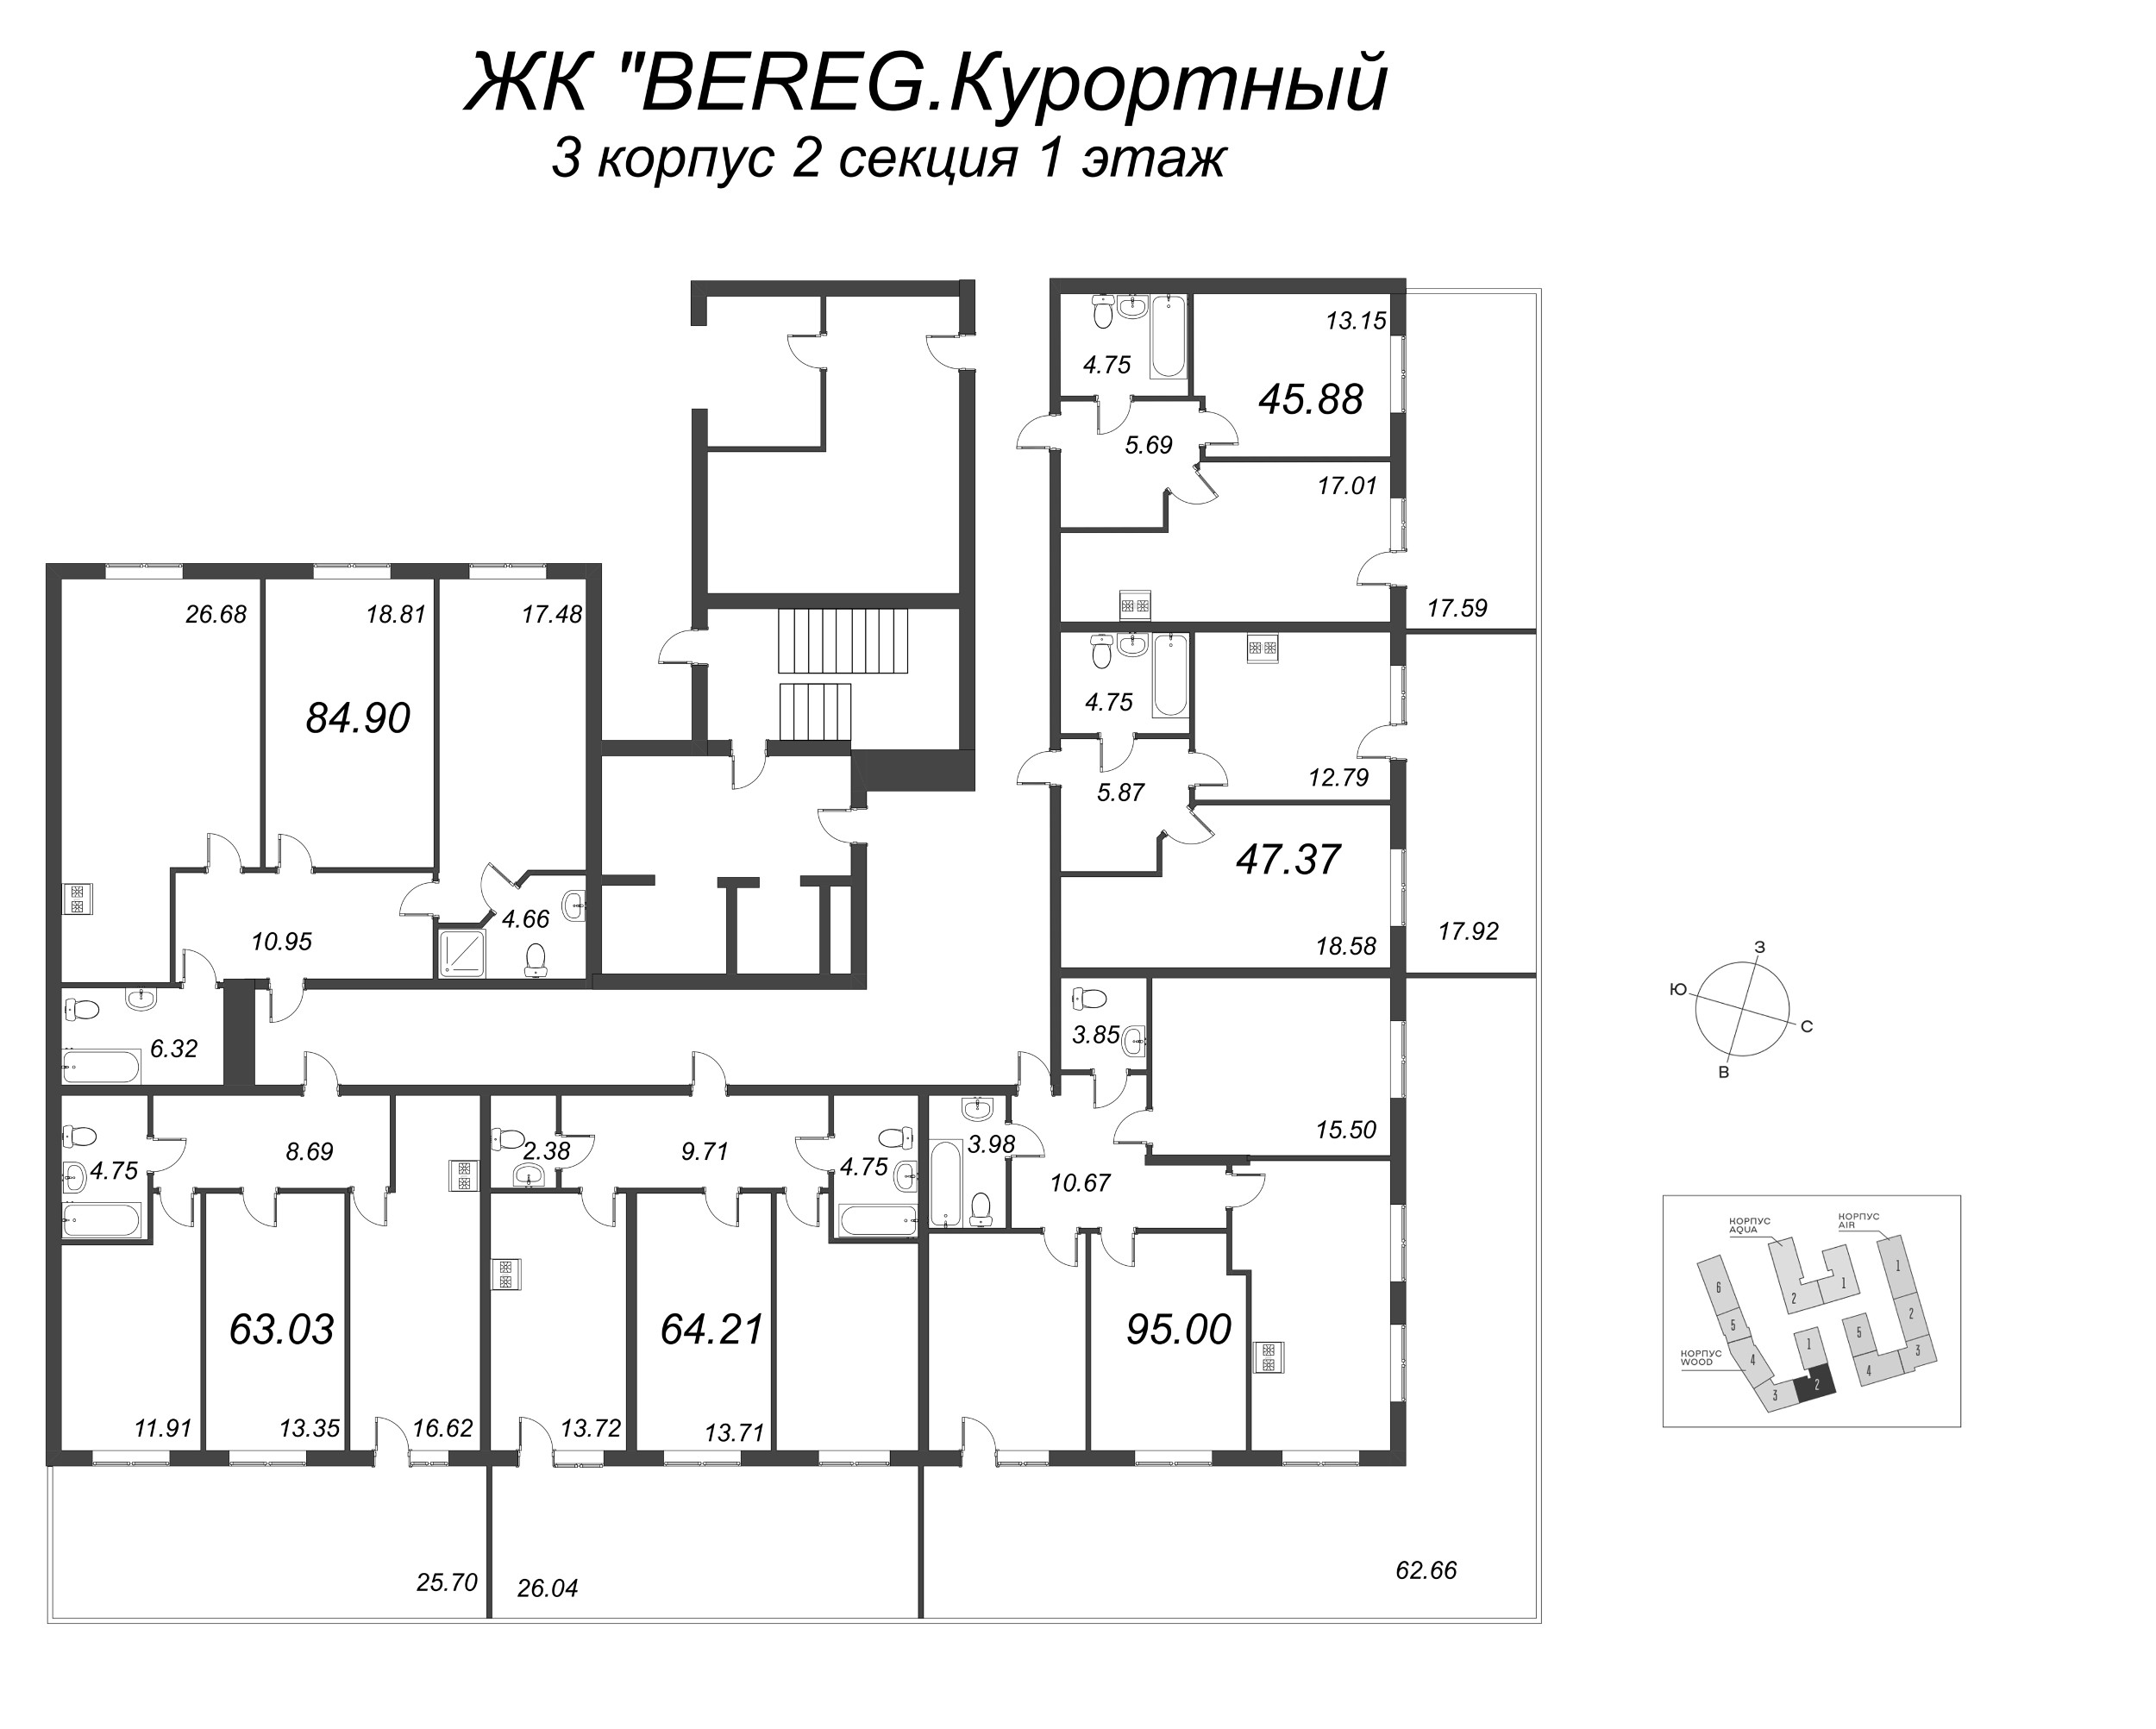 3-комнатная (Евро) квартира, 63.03 м² - планировка этажа